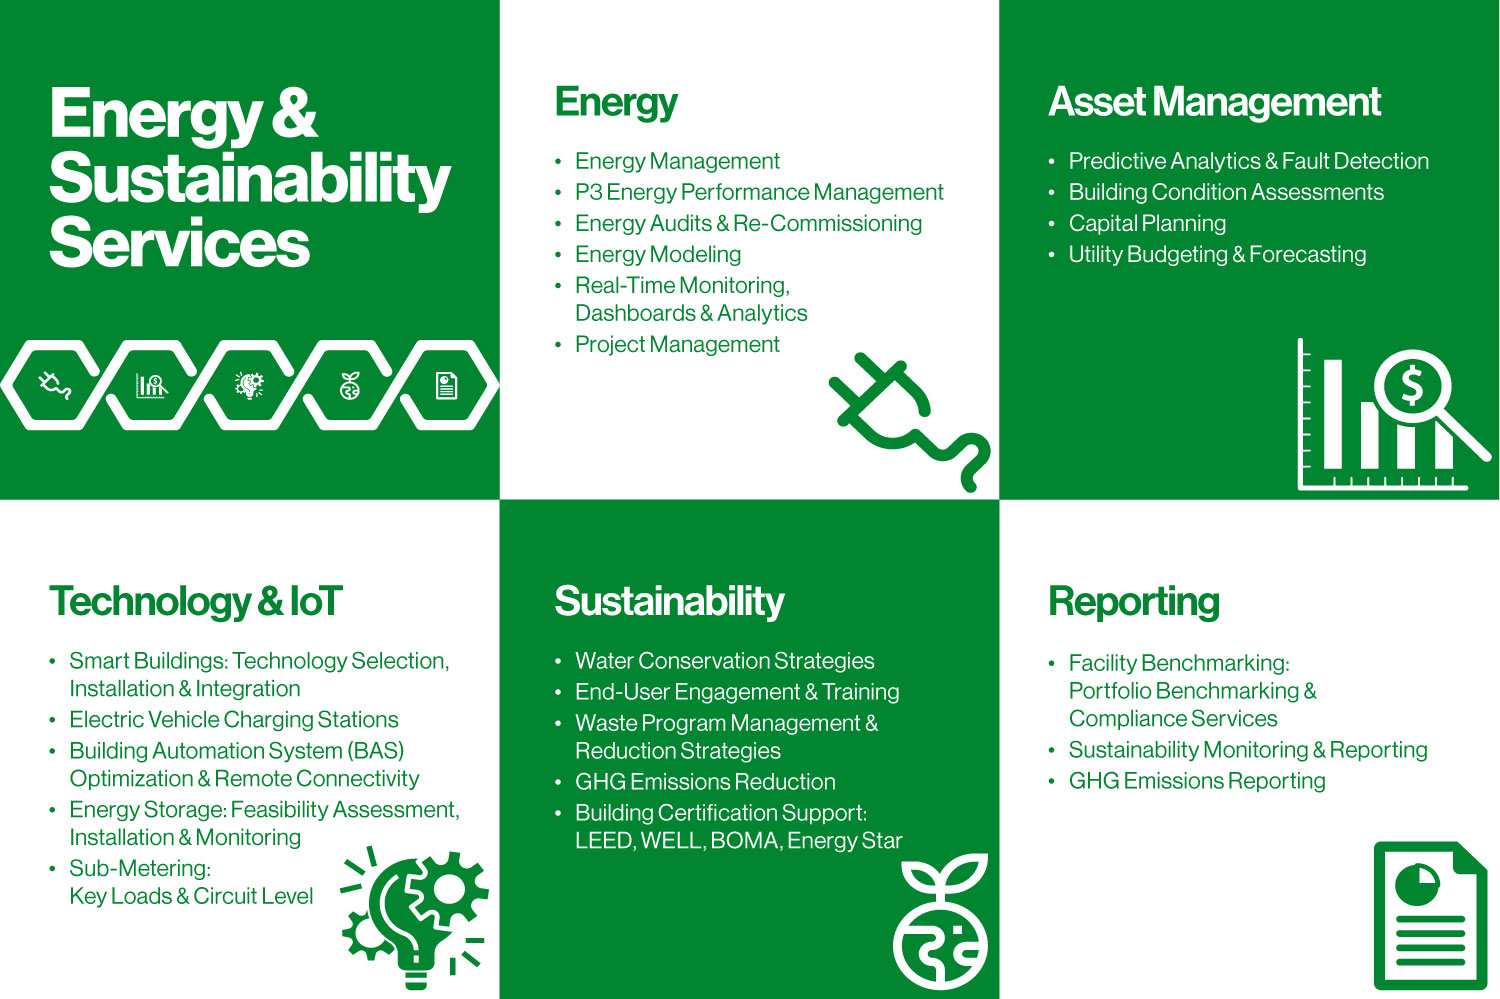 Black & McDonald's energy & sustainability services chart